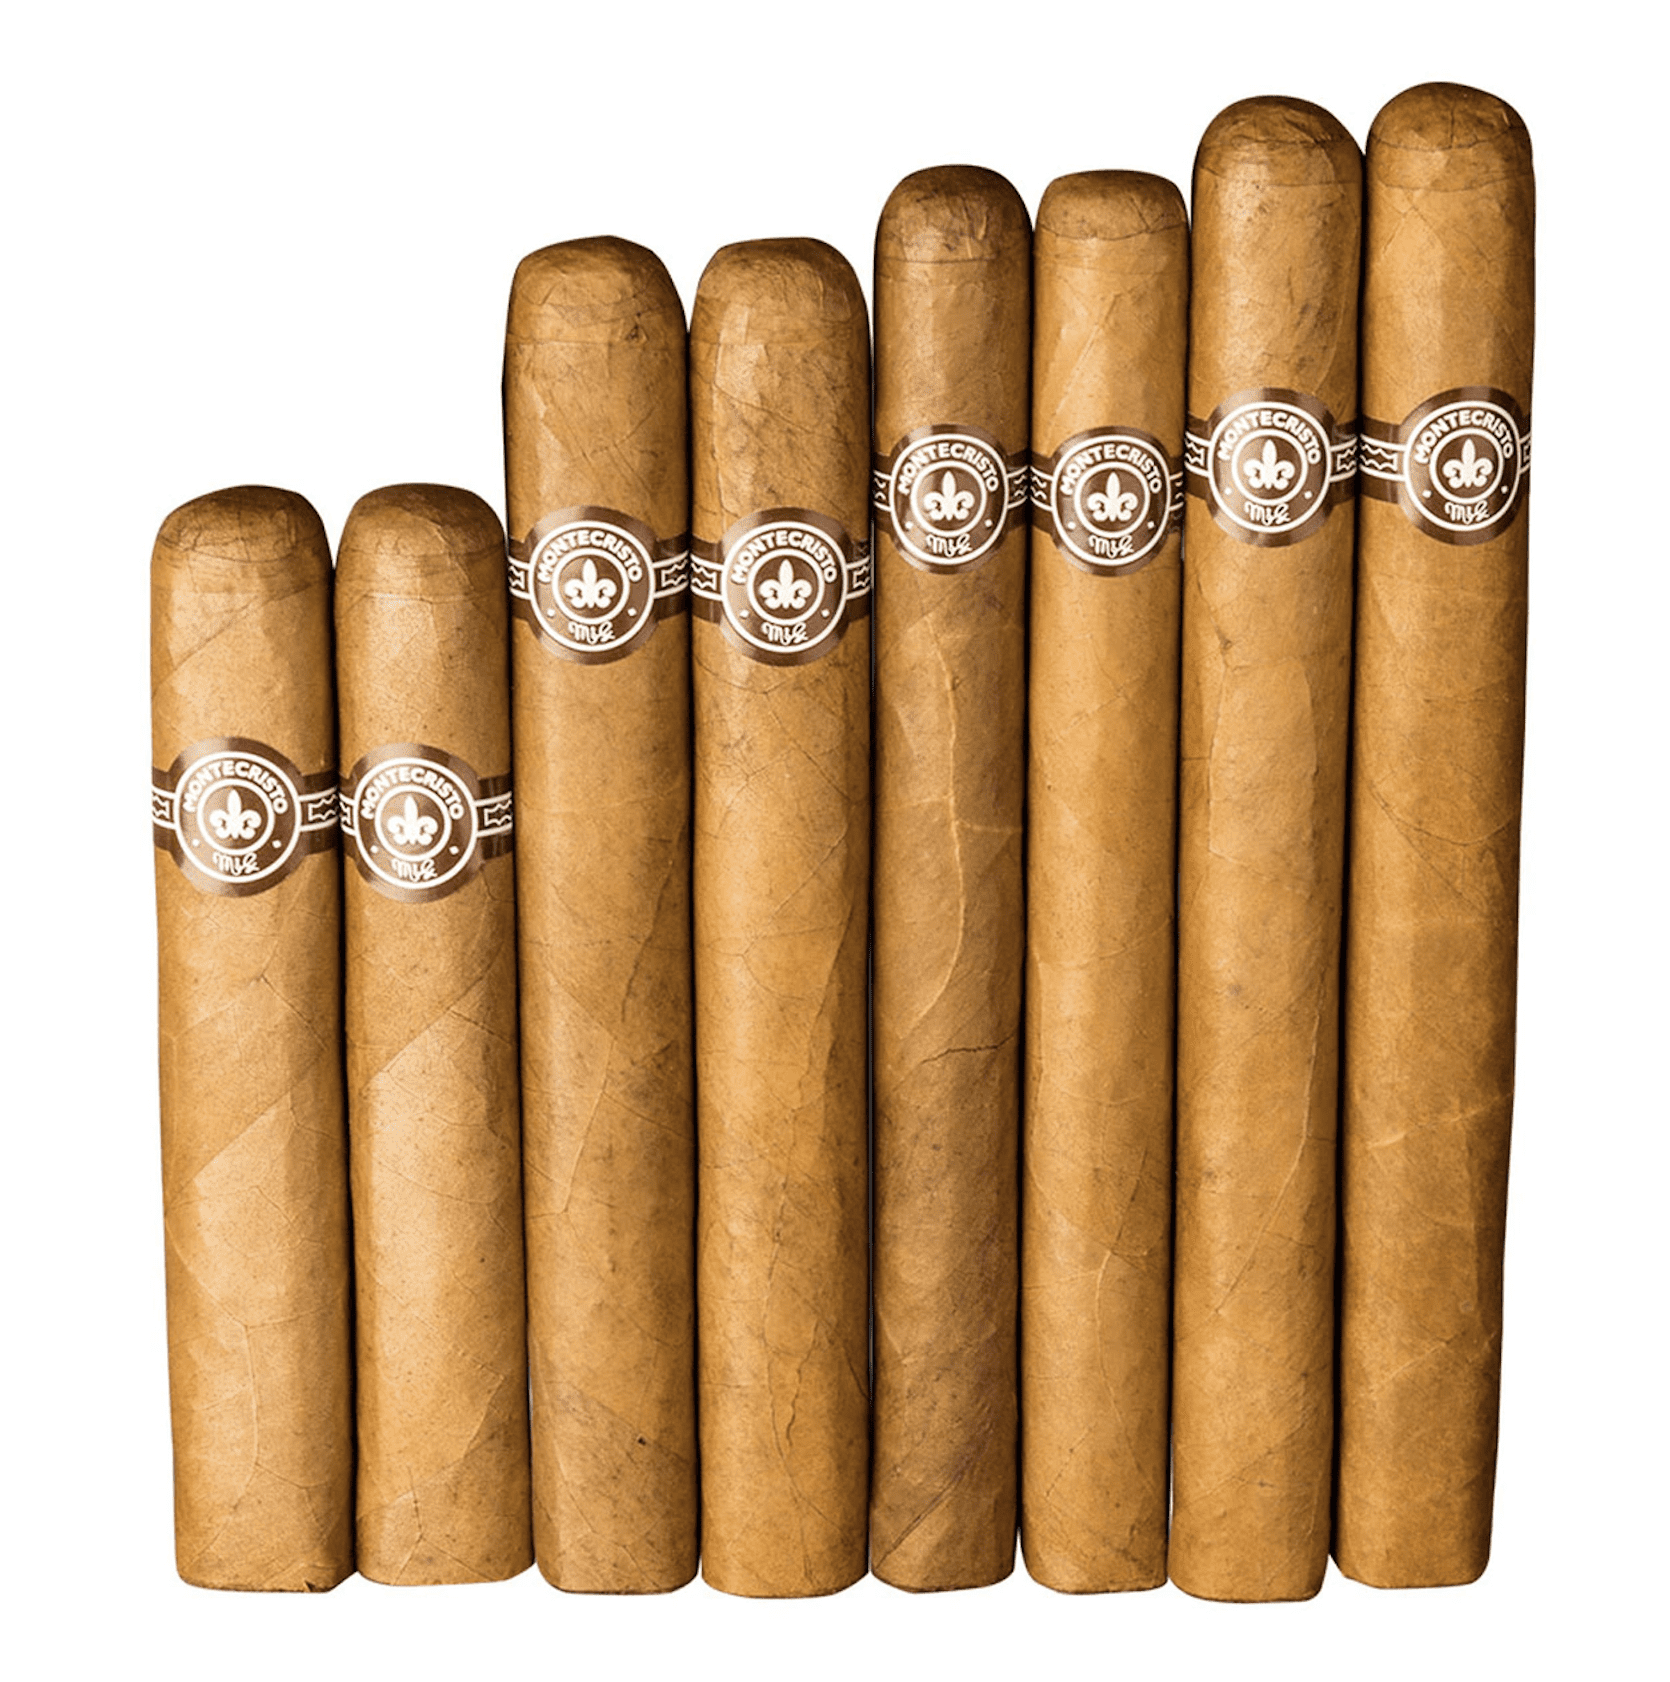 8 count assortment of Montecristo cigars